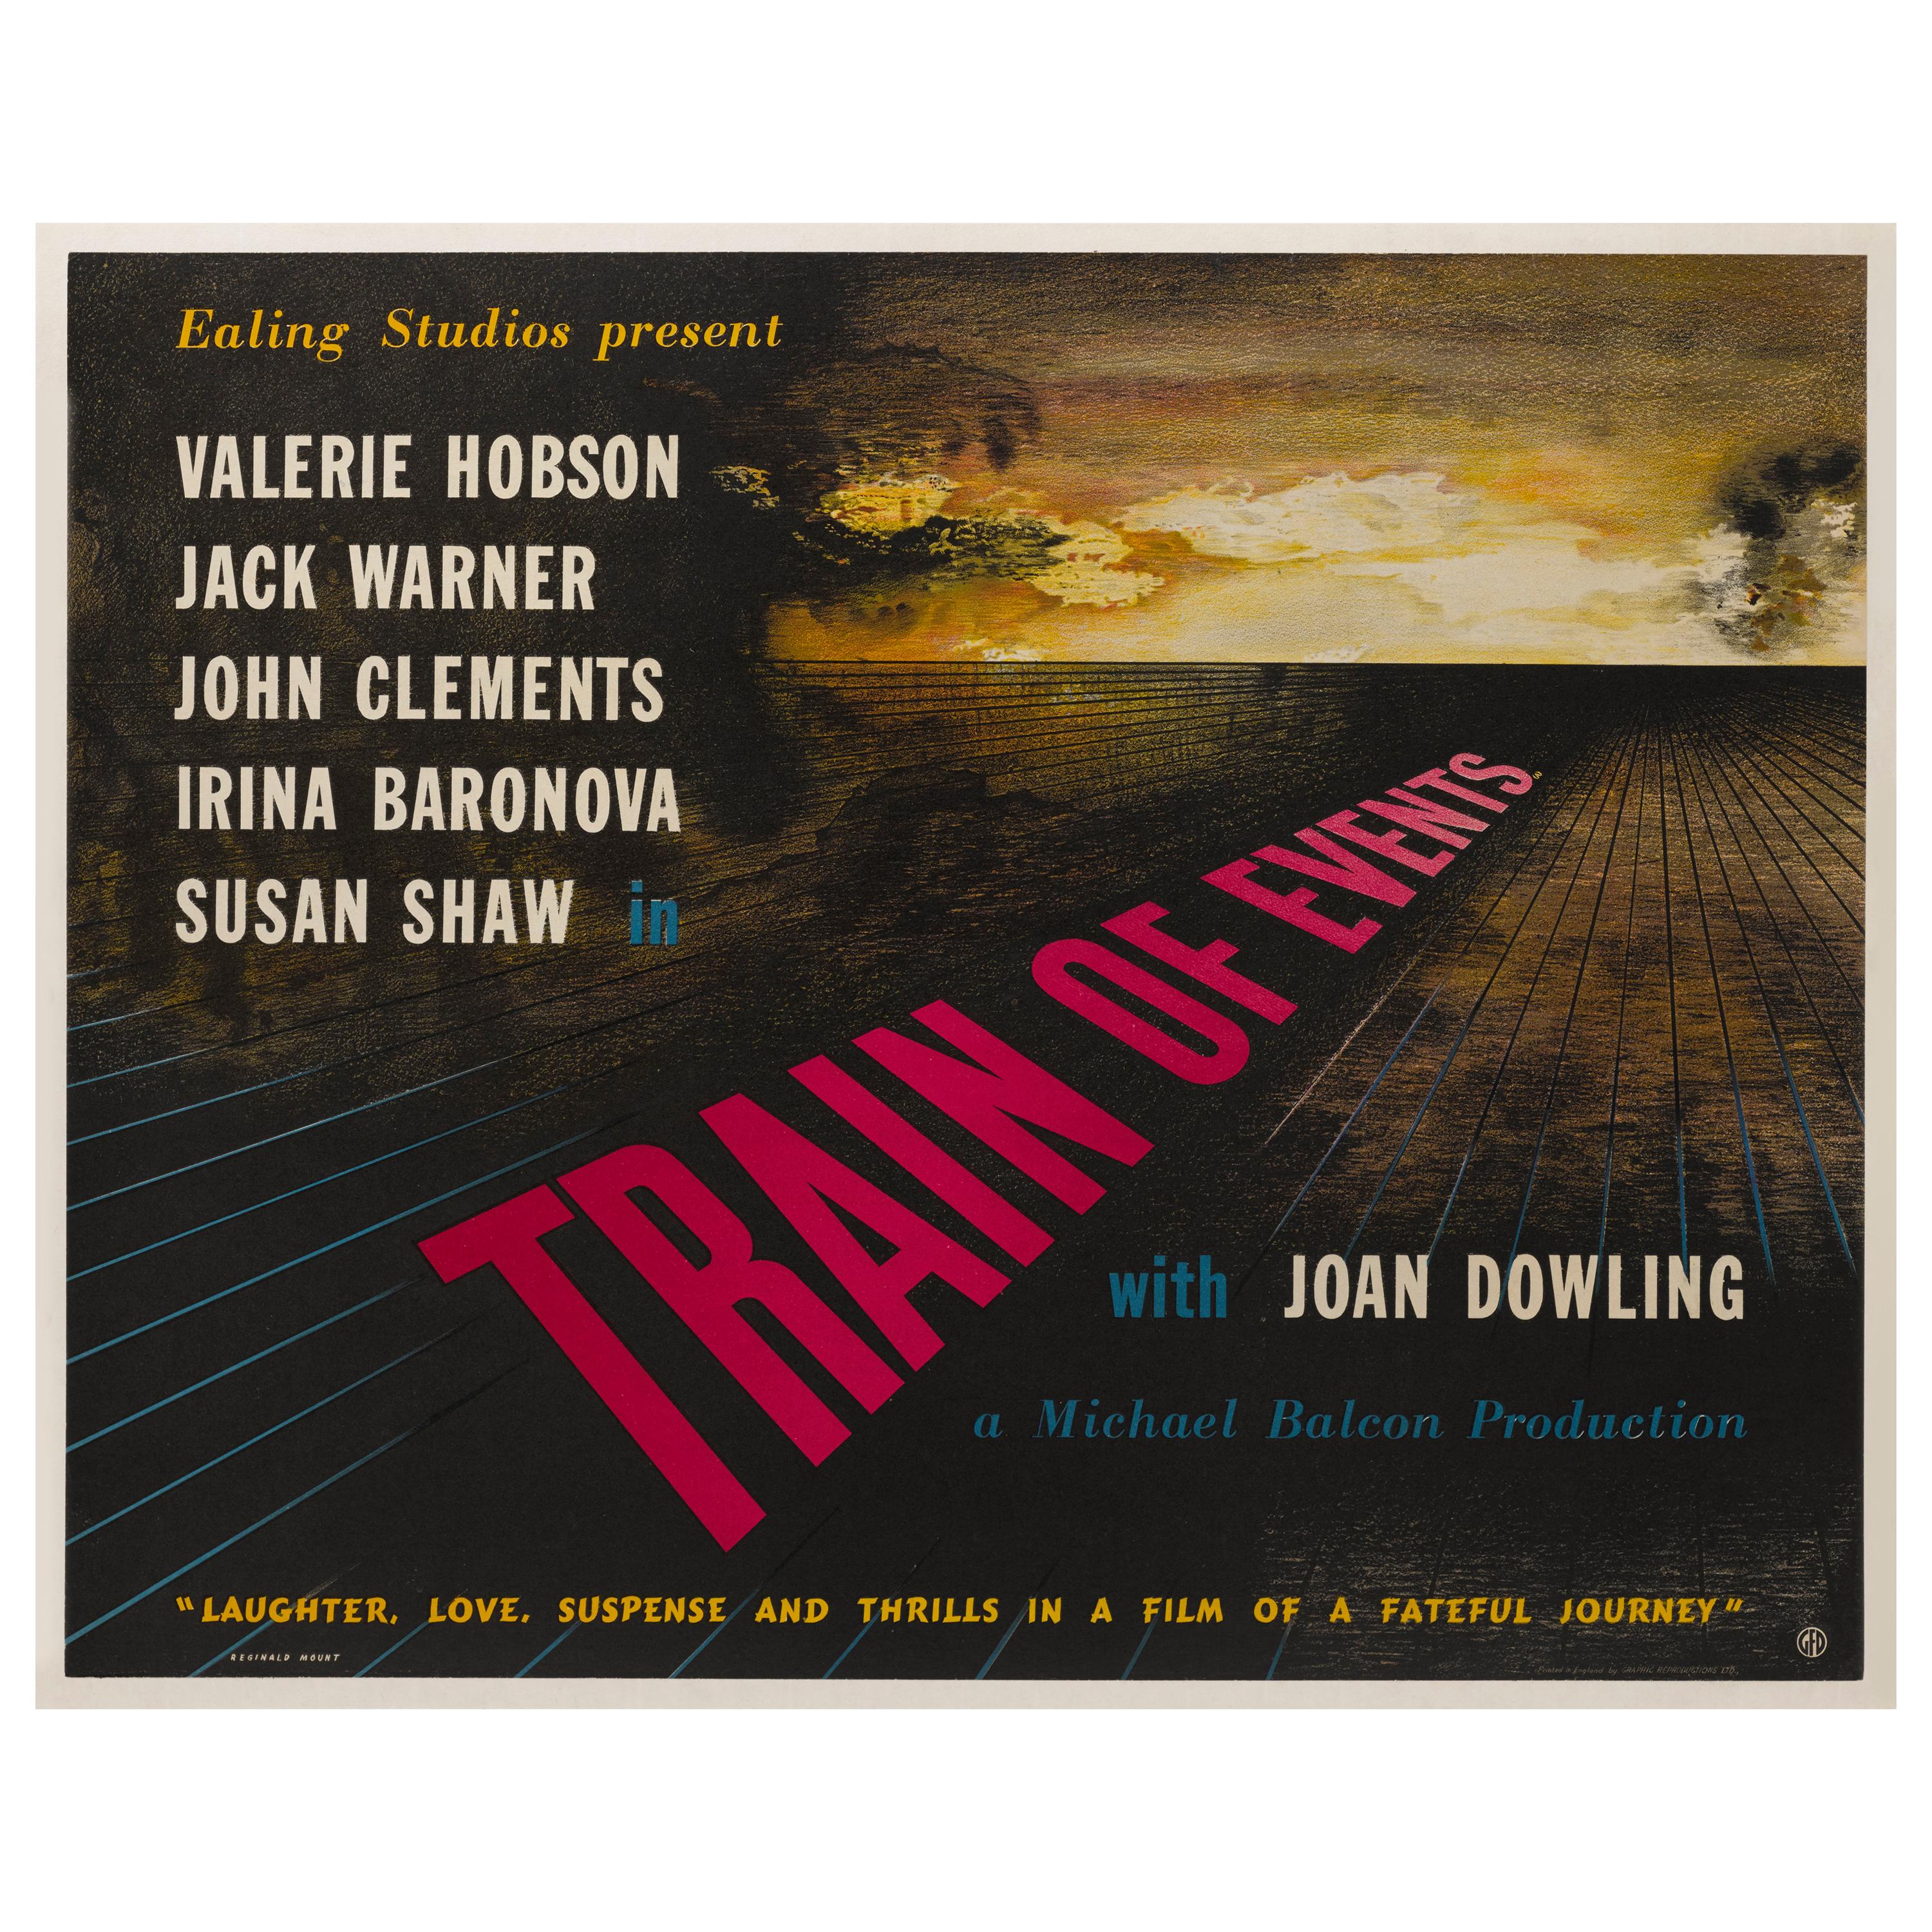 Affiche du film "Train of Event" (Train of Event)